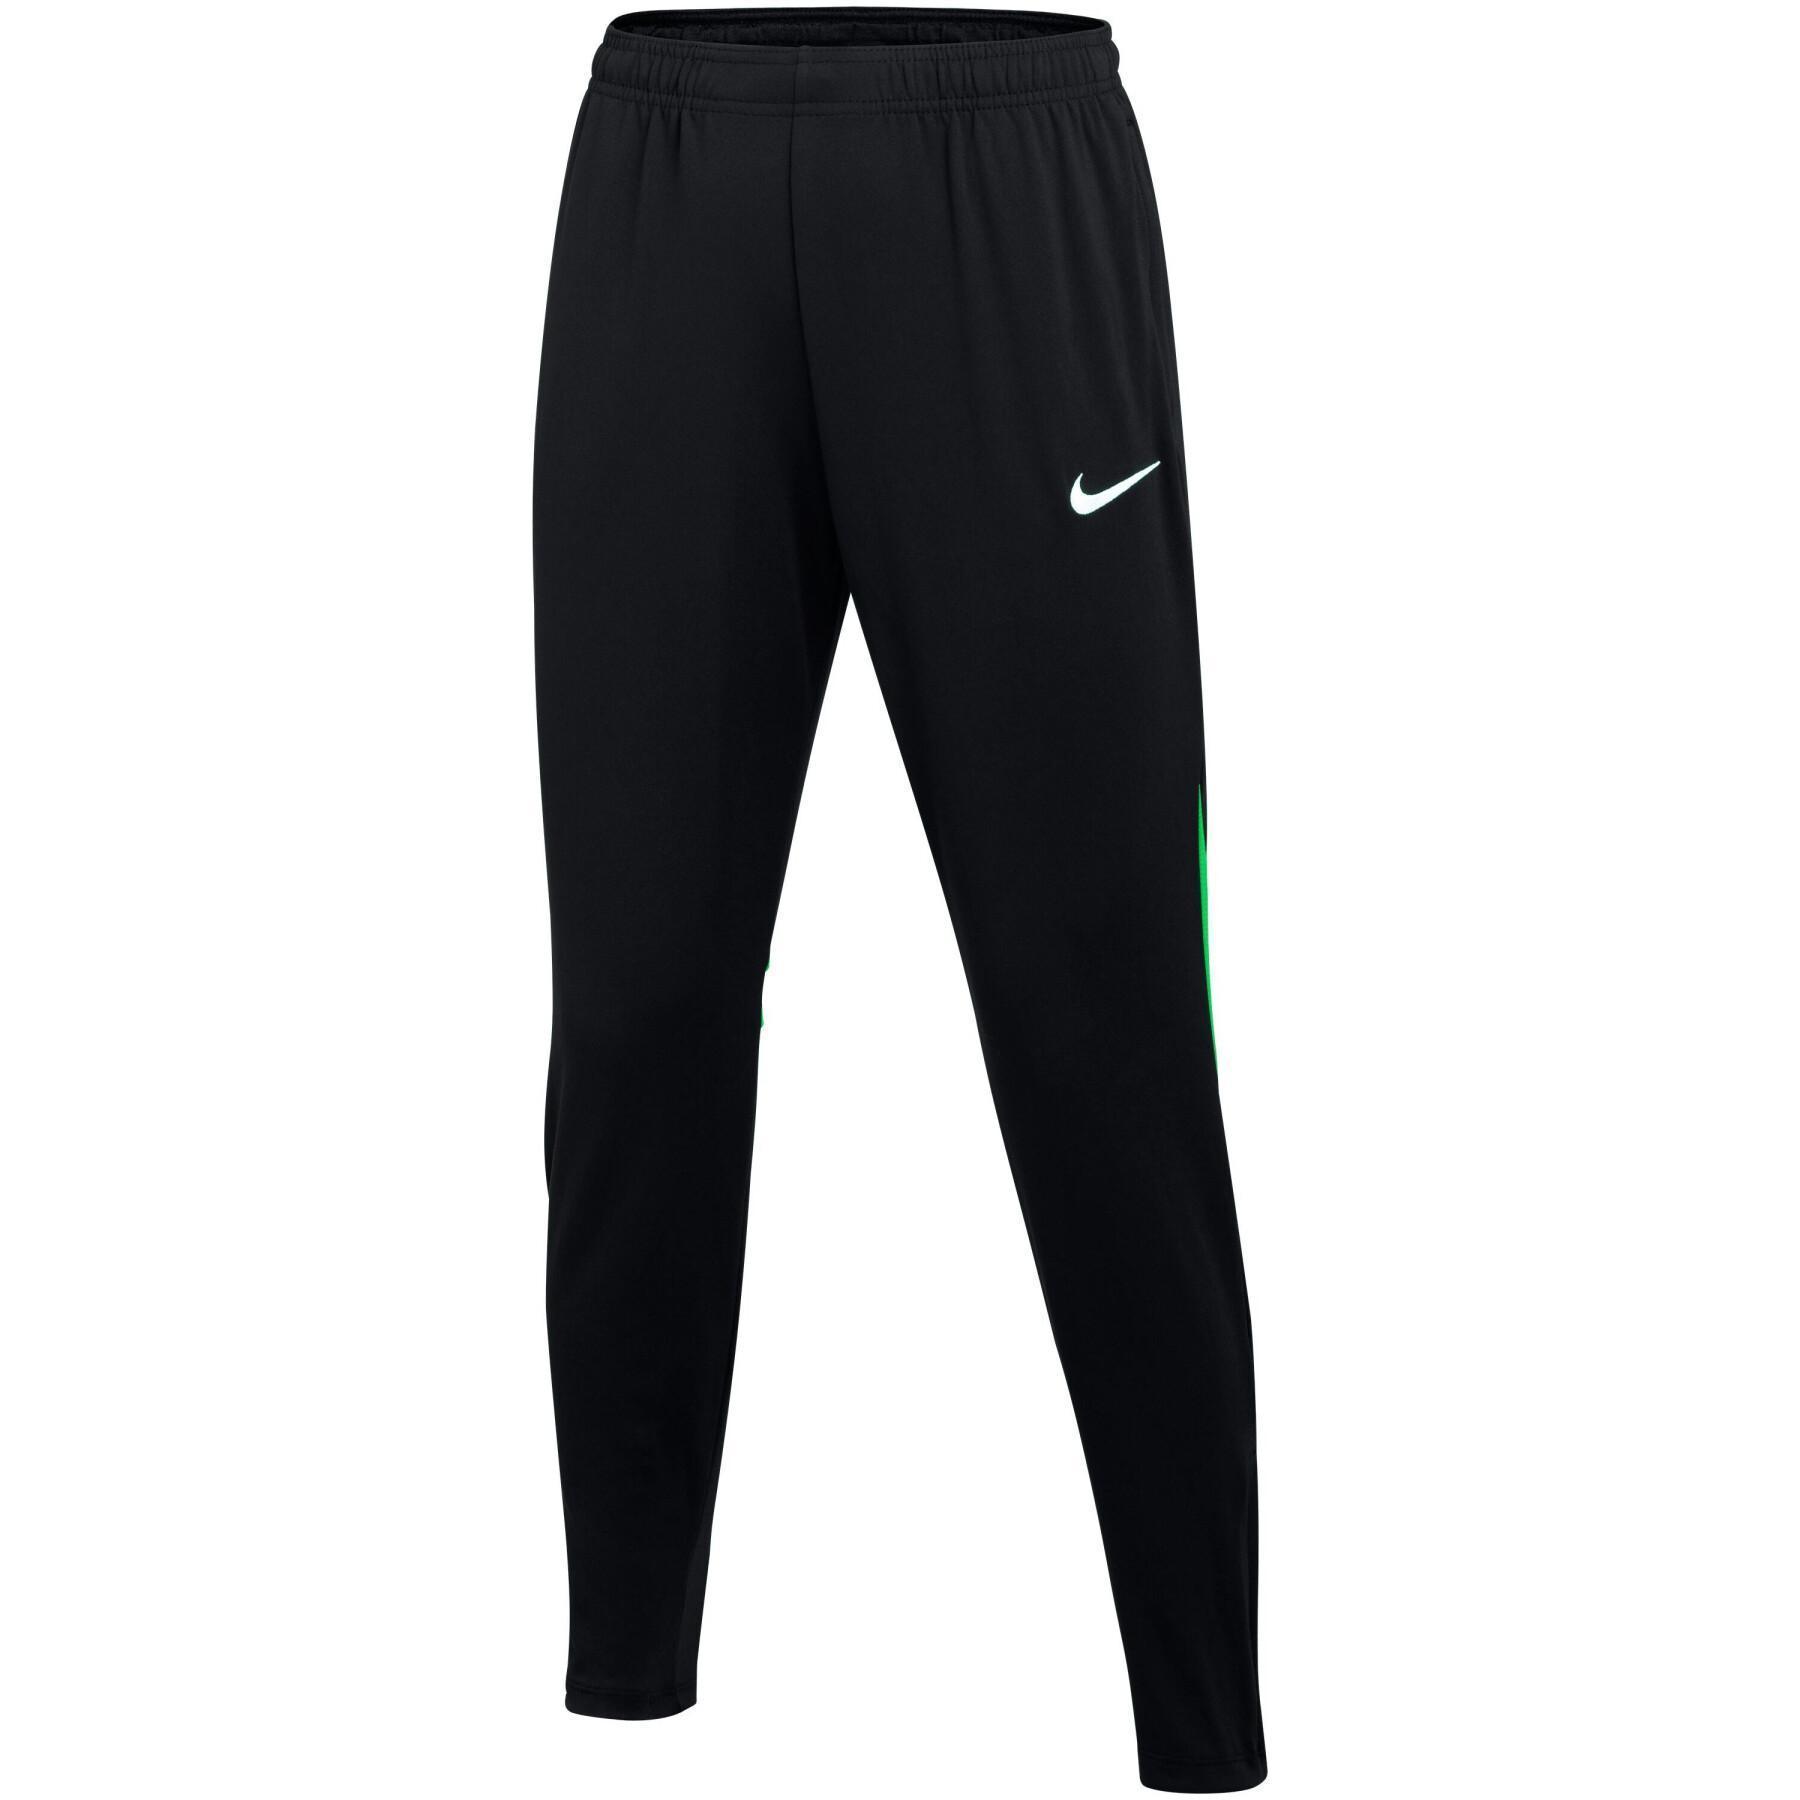 Jogging femme Nike Academy pro - Nike - Marques - Textile